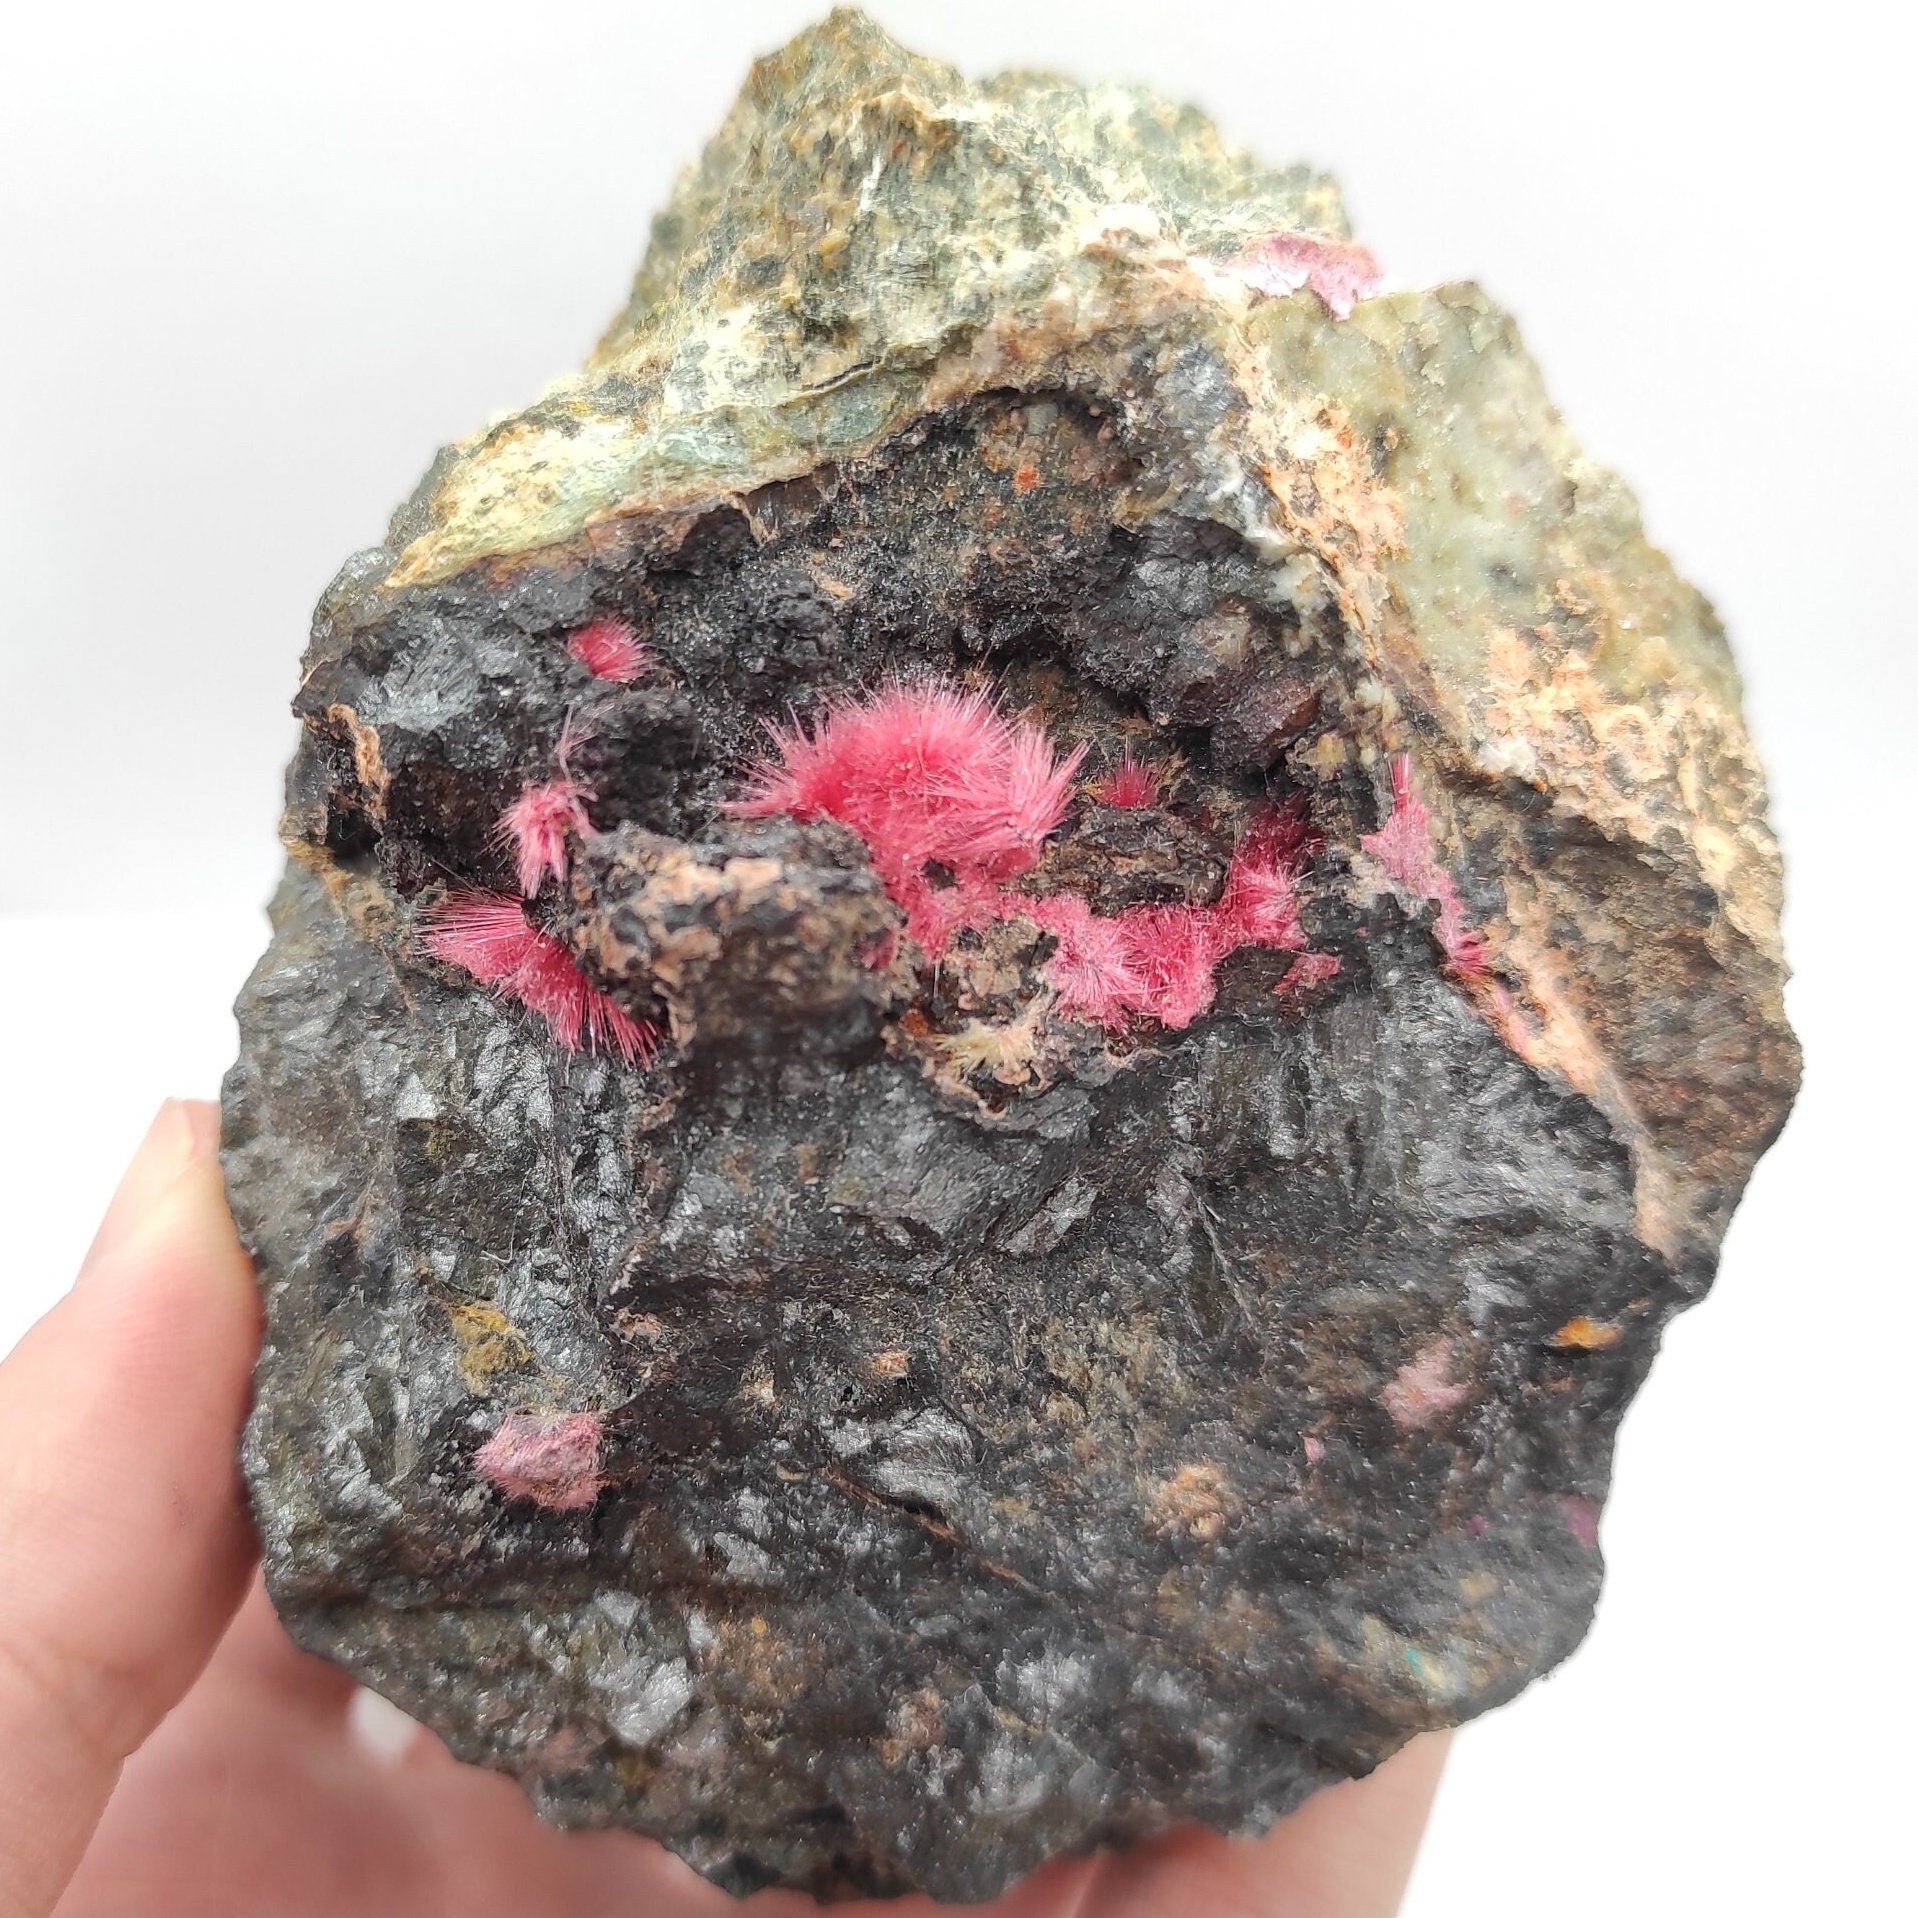 Rare! 1.15kg Fibrous Erythrite in Matrix - Bou Azzer, Morocco - Fine Mineral Specimens - Pink Erythrite Crystals - Rare Cobalt Crystal